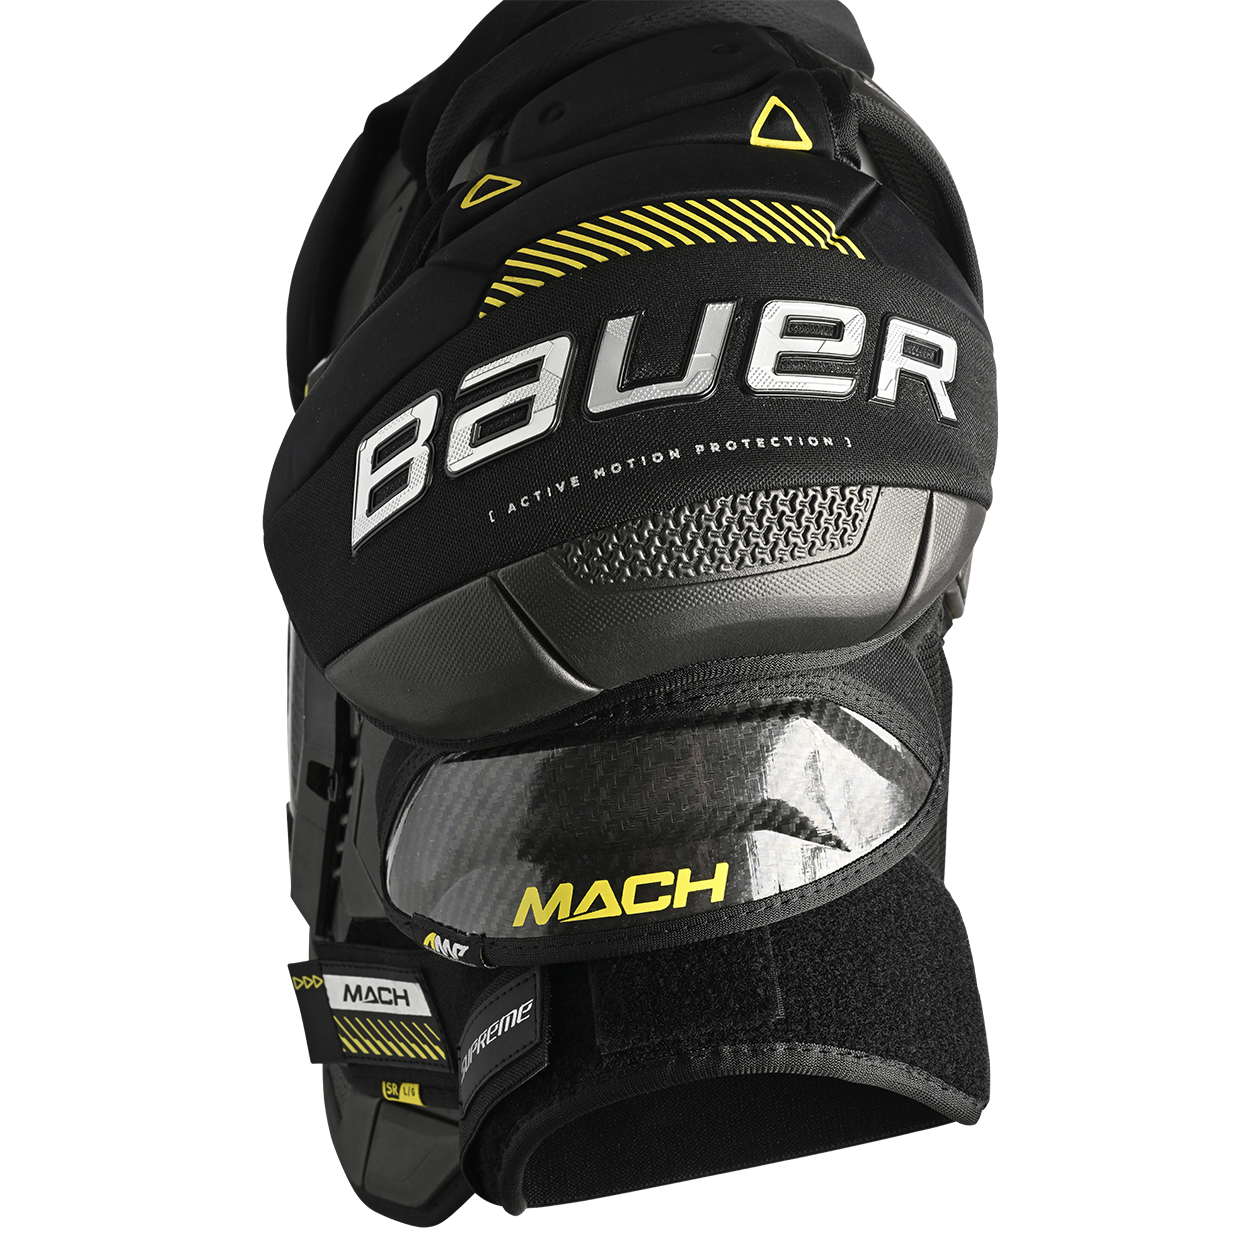 Bauer Supreme Mach Shoulder Pad - Youth - R&M Hockey Supply